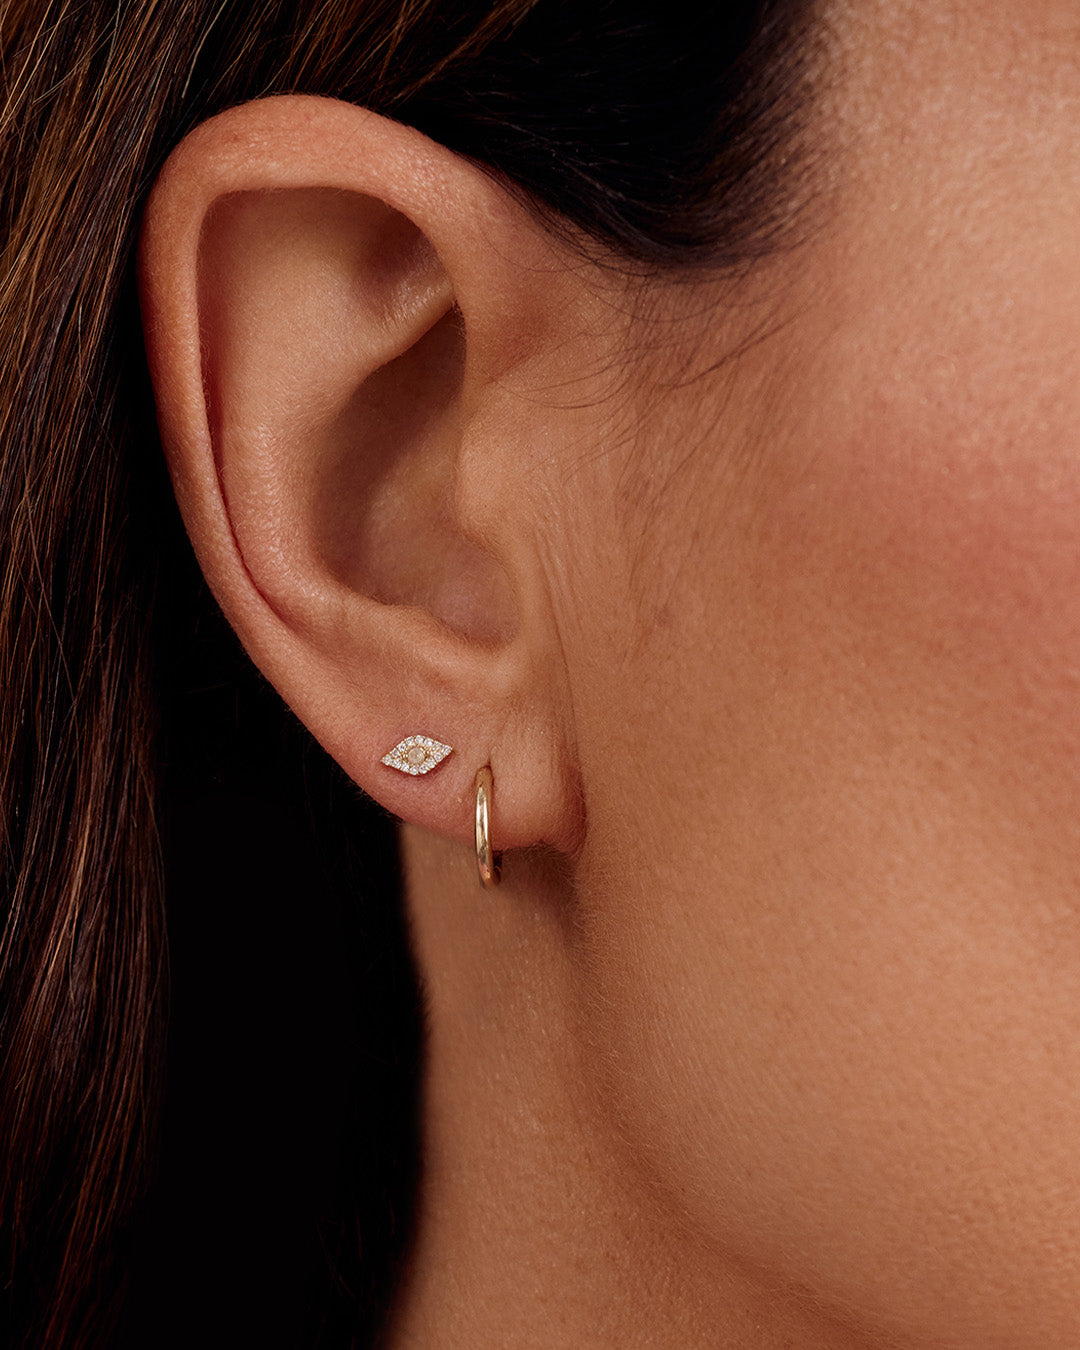 Classic Diamond Studs Earring in 14K Solid Gold/Pair, Women's by Gorjana